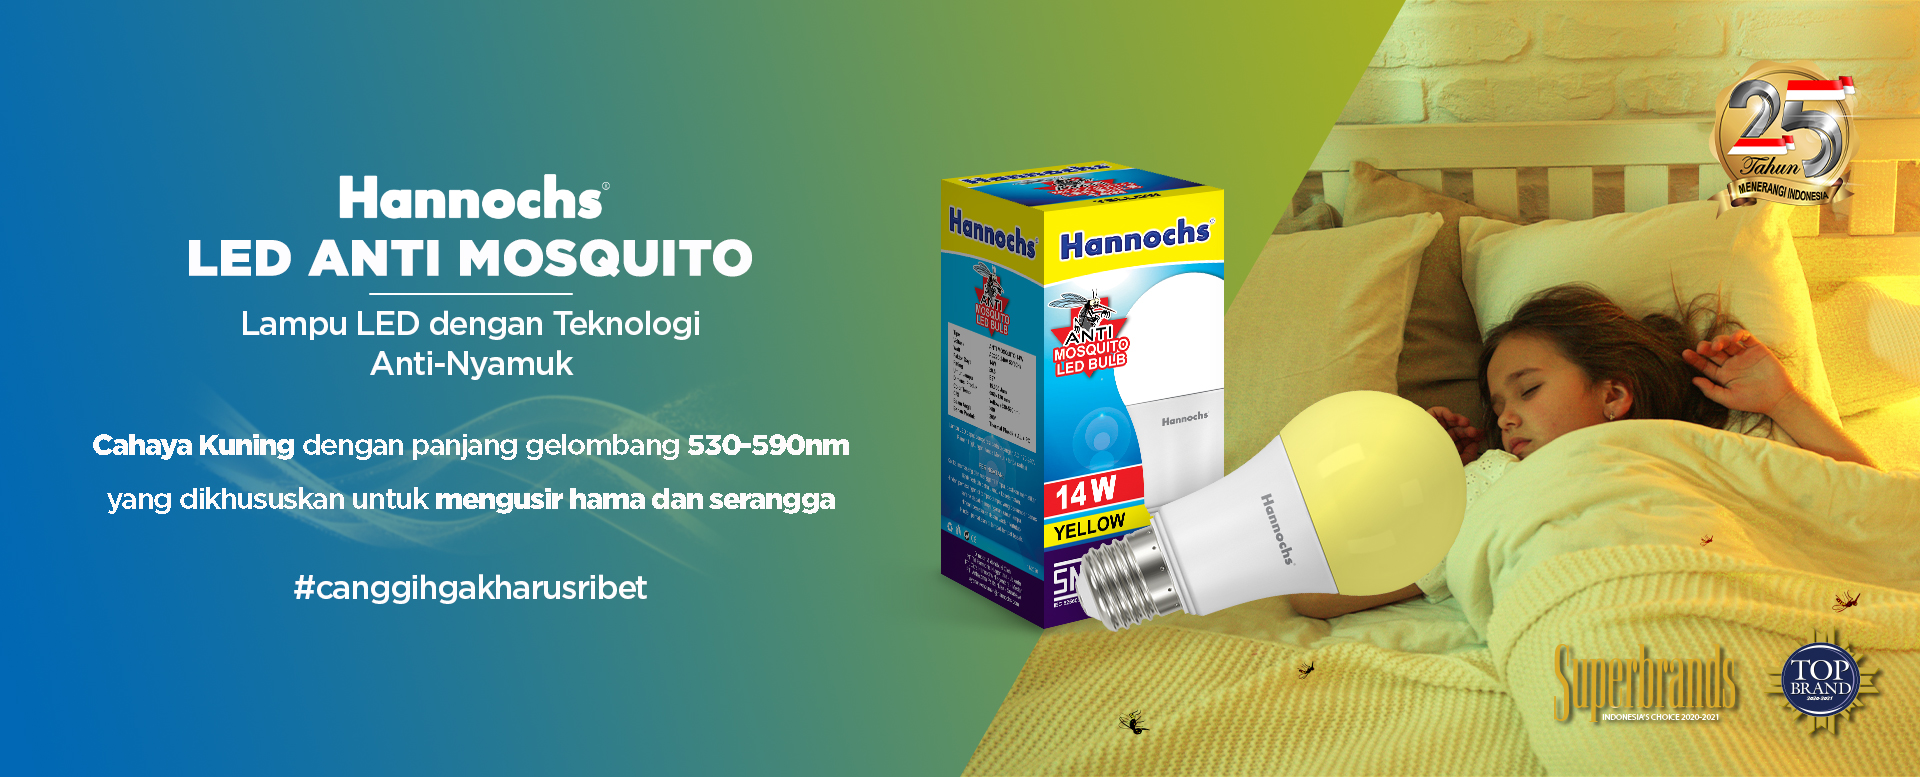 Hannochs Anti Mosquito